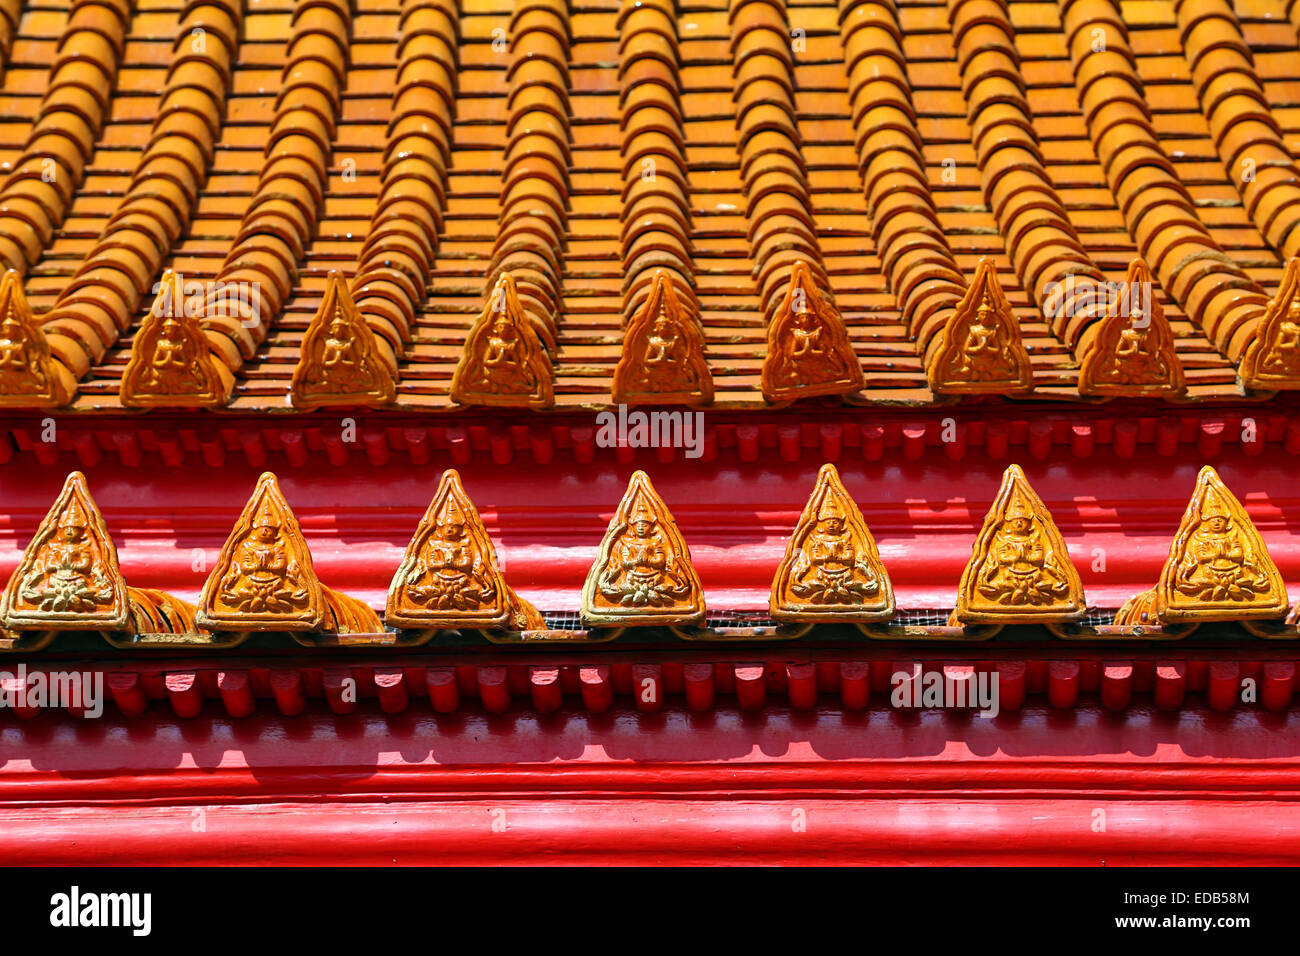 Tiled roof with orange tiles at Wat Benchamabopitr, the Marble Temple, Bangkok, Thailand Stock Photo